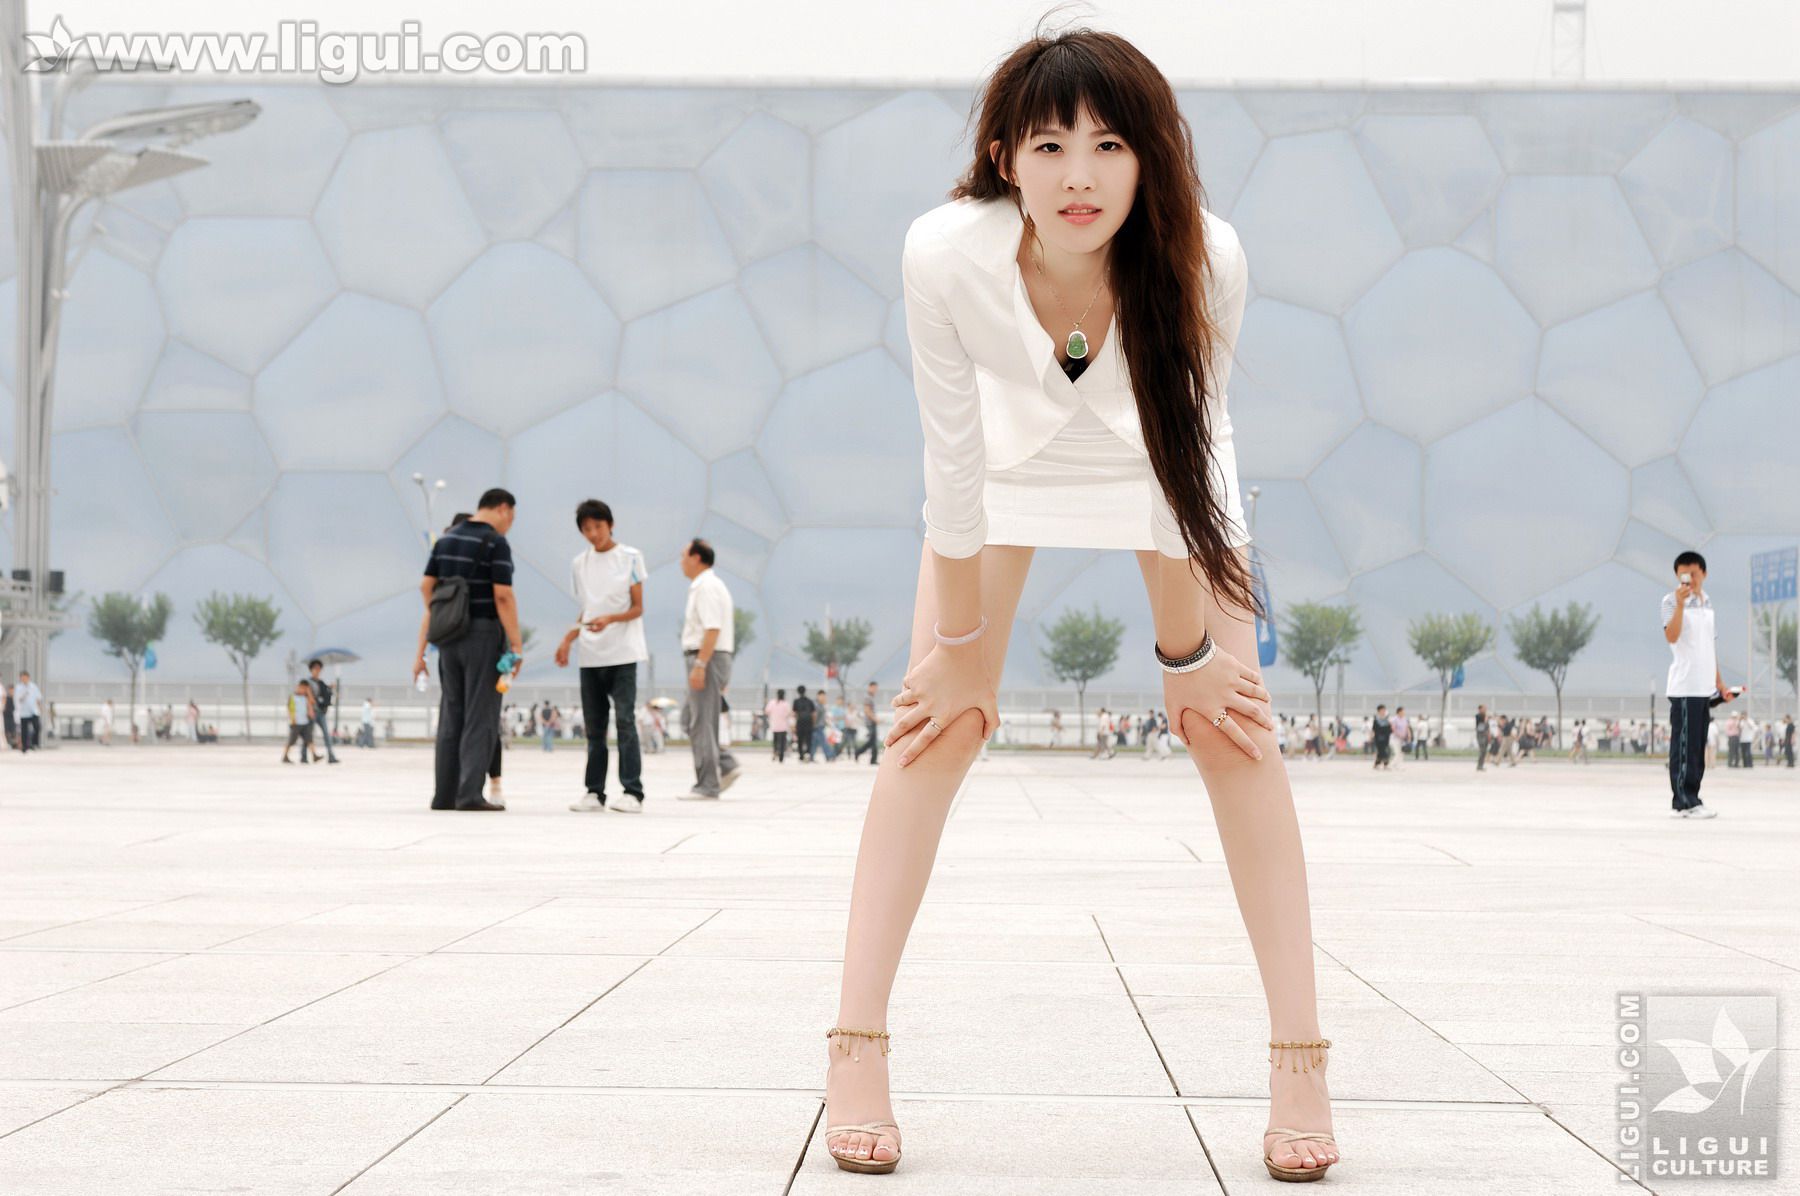 Model Feifei “Super Beauty Olympic Stadium Exhibition” [丽柜LiGui] Beautiful legs and jade feet photo pictures